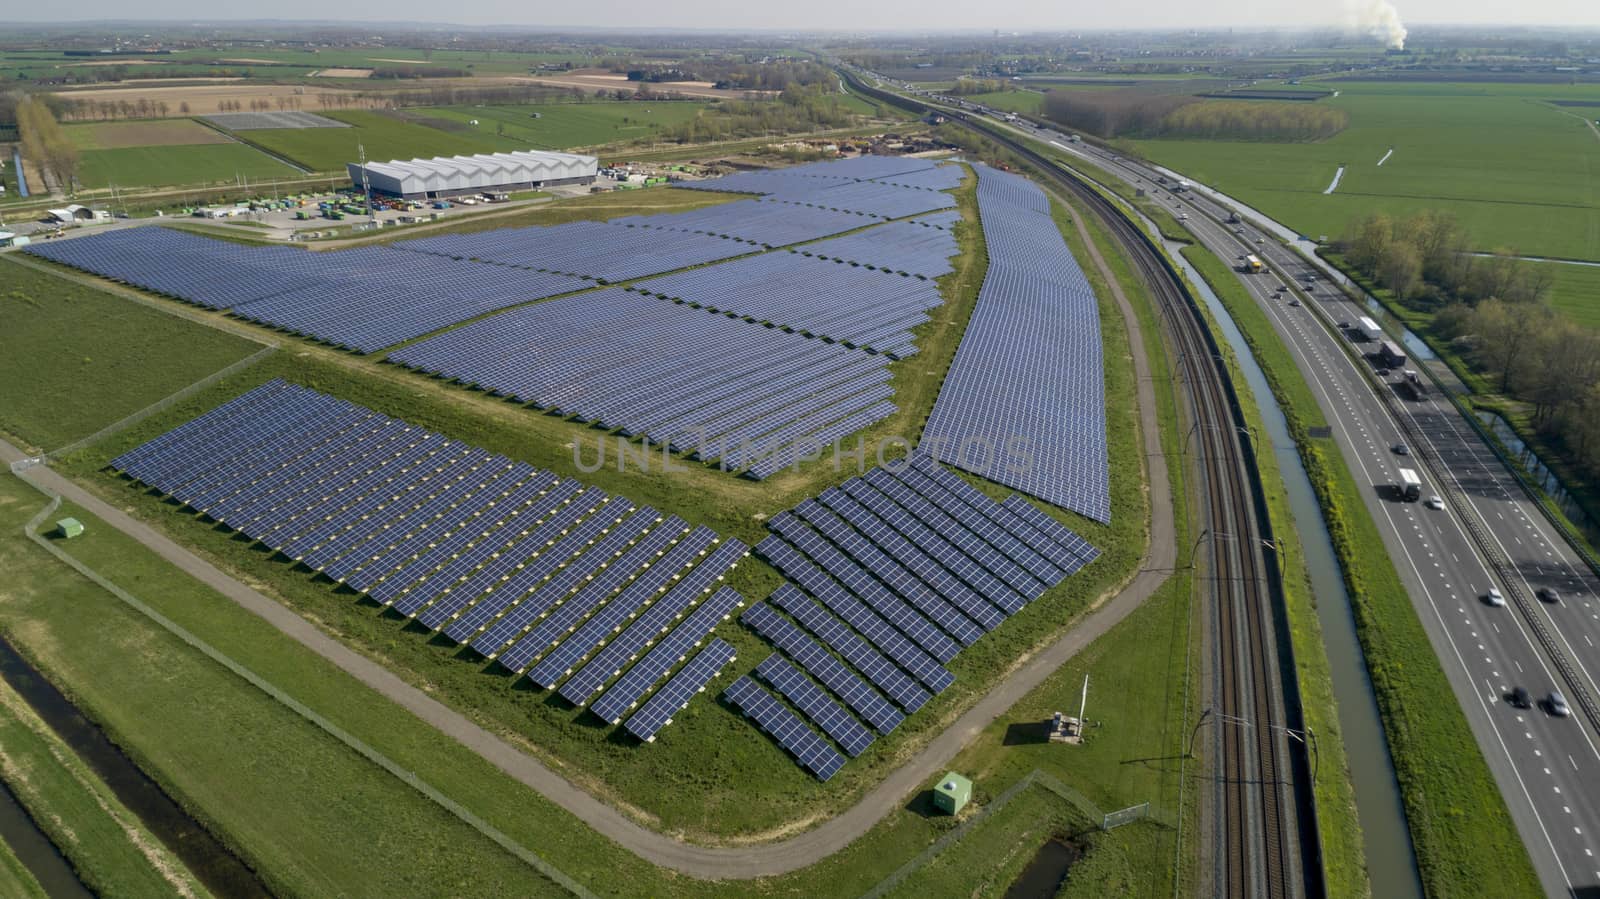 Solar panel farm with photovoltaic panels for clean solar energy